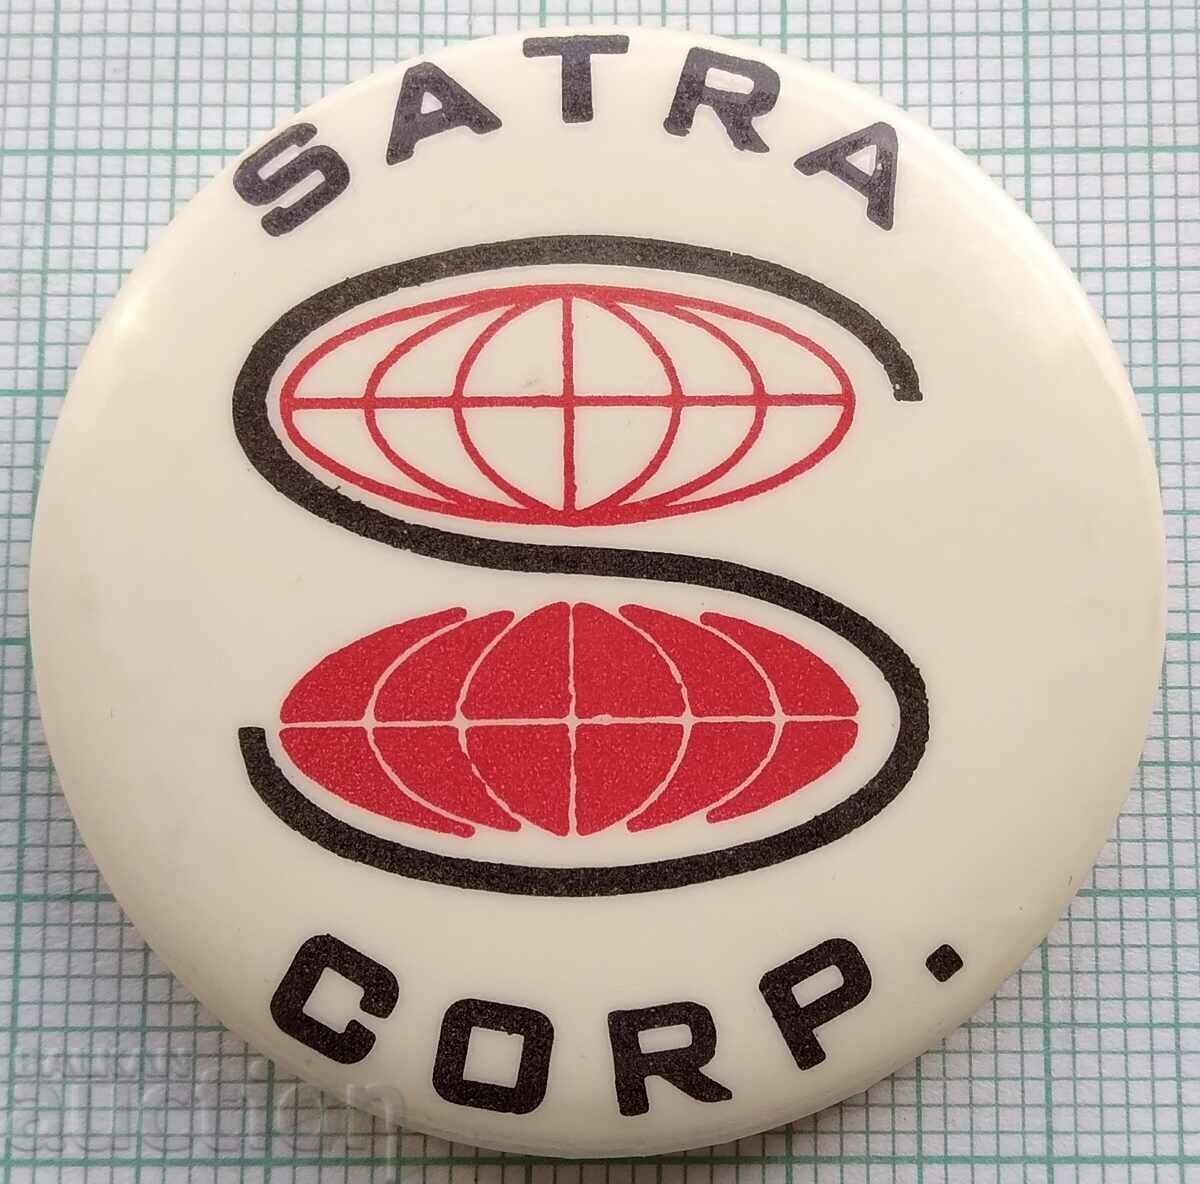 14632 Badge - Satra Corporation